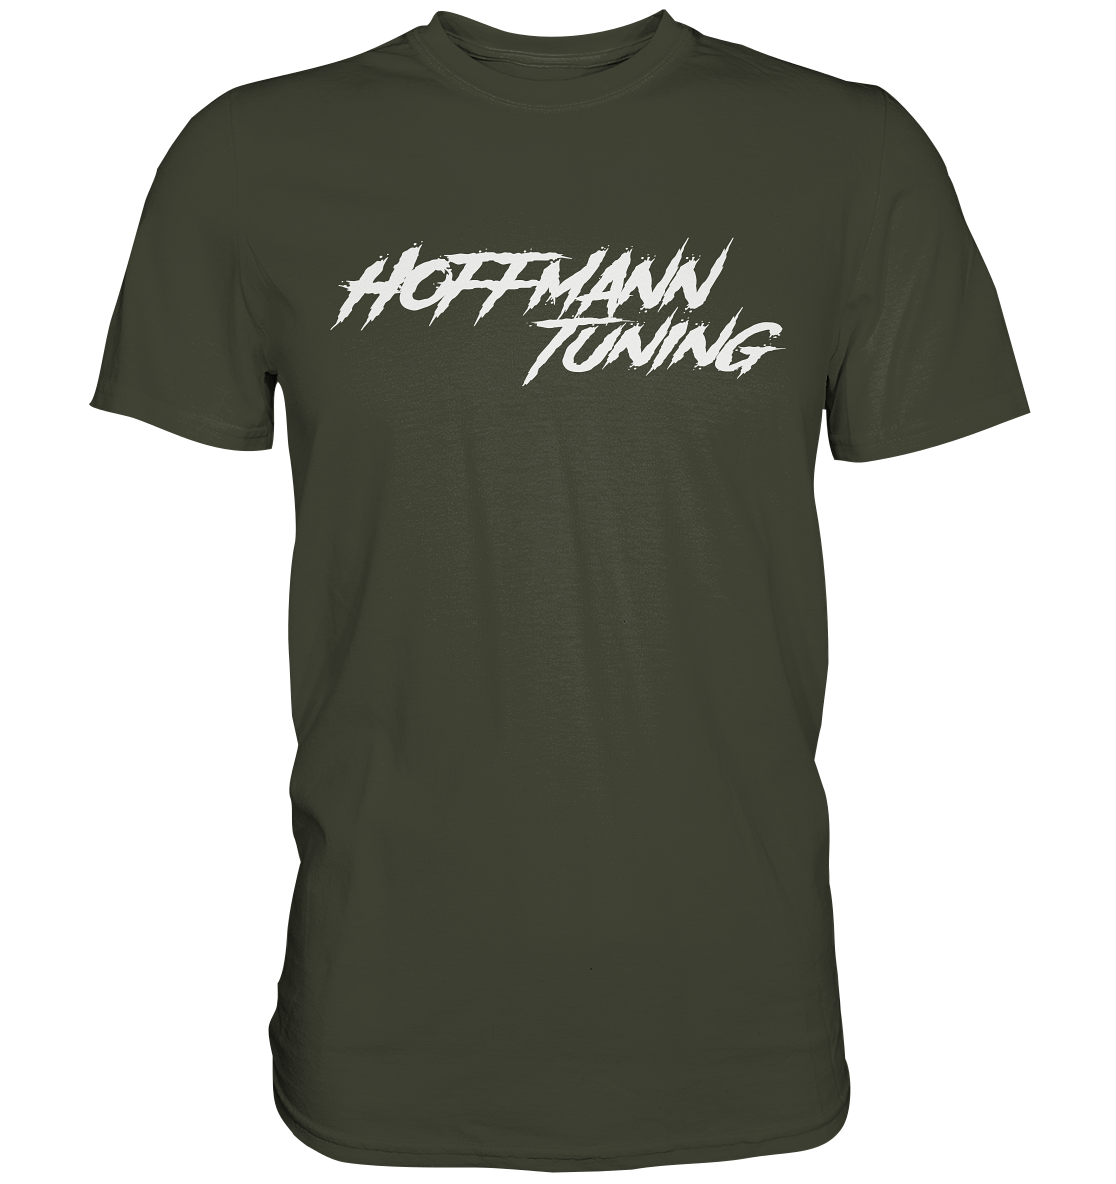 Hoffmann Tuning Edition - Premium Shirt